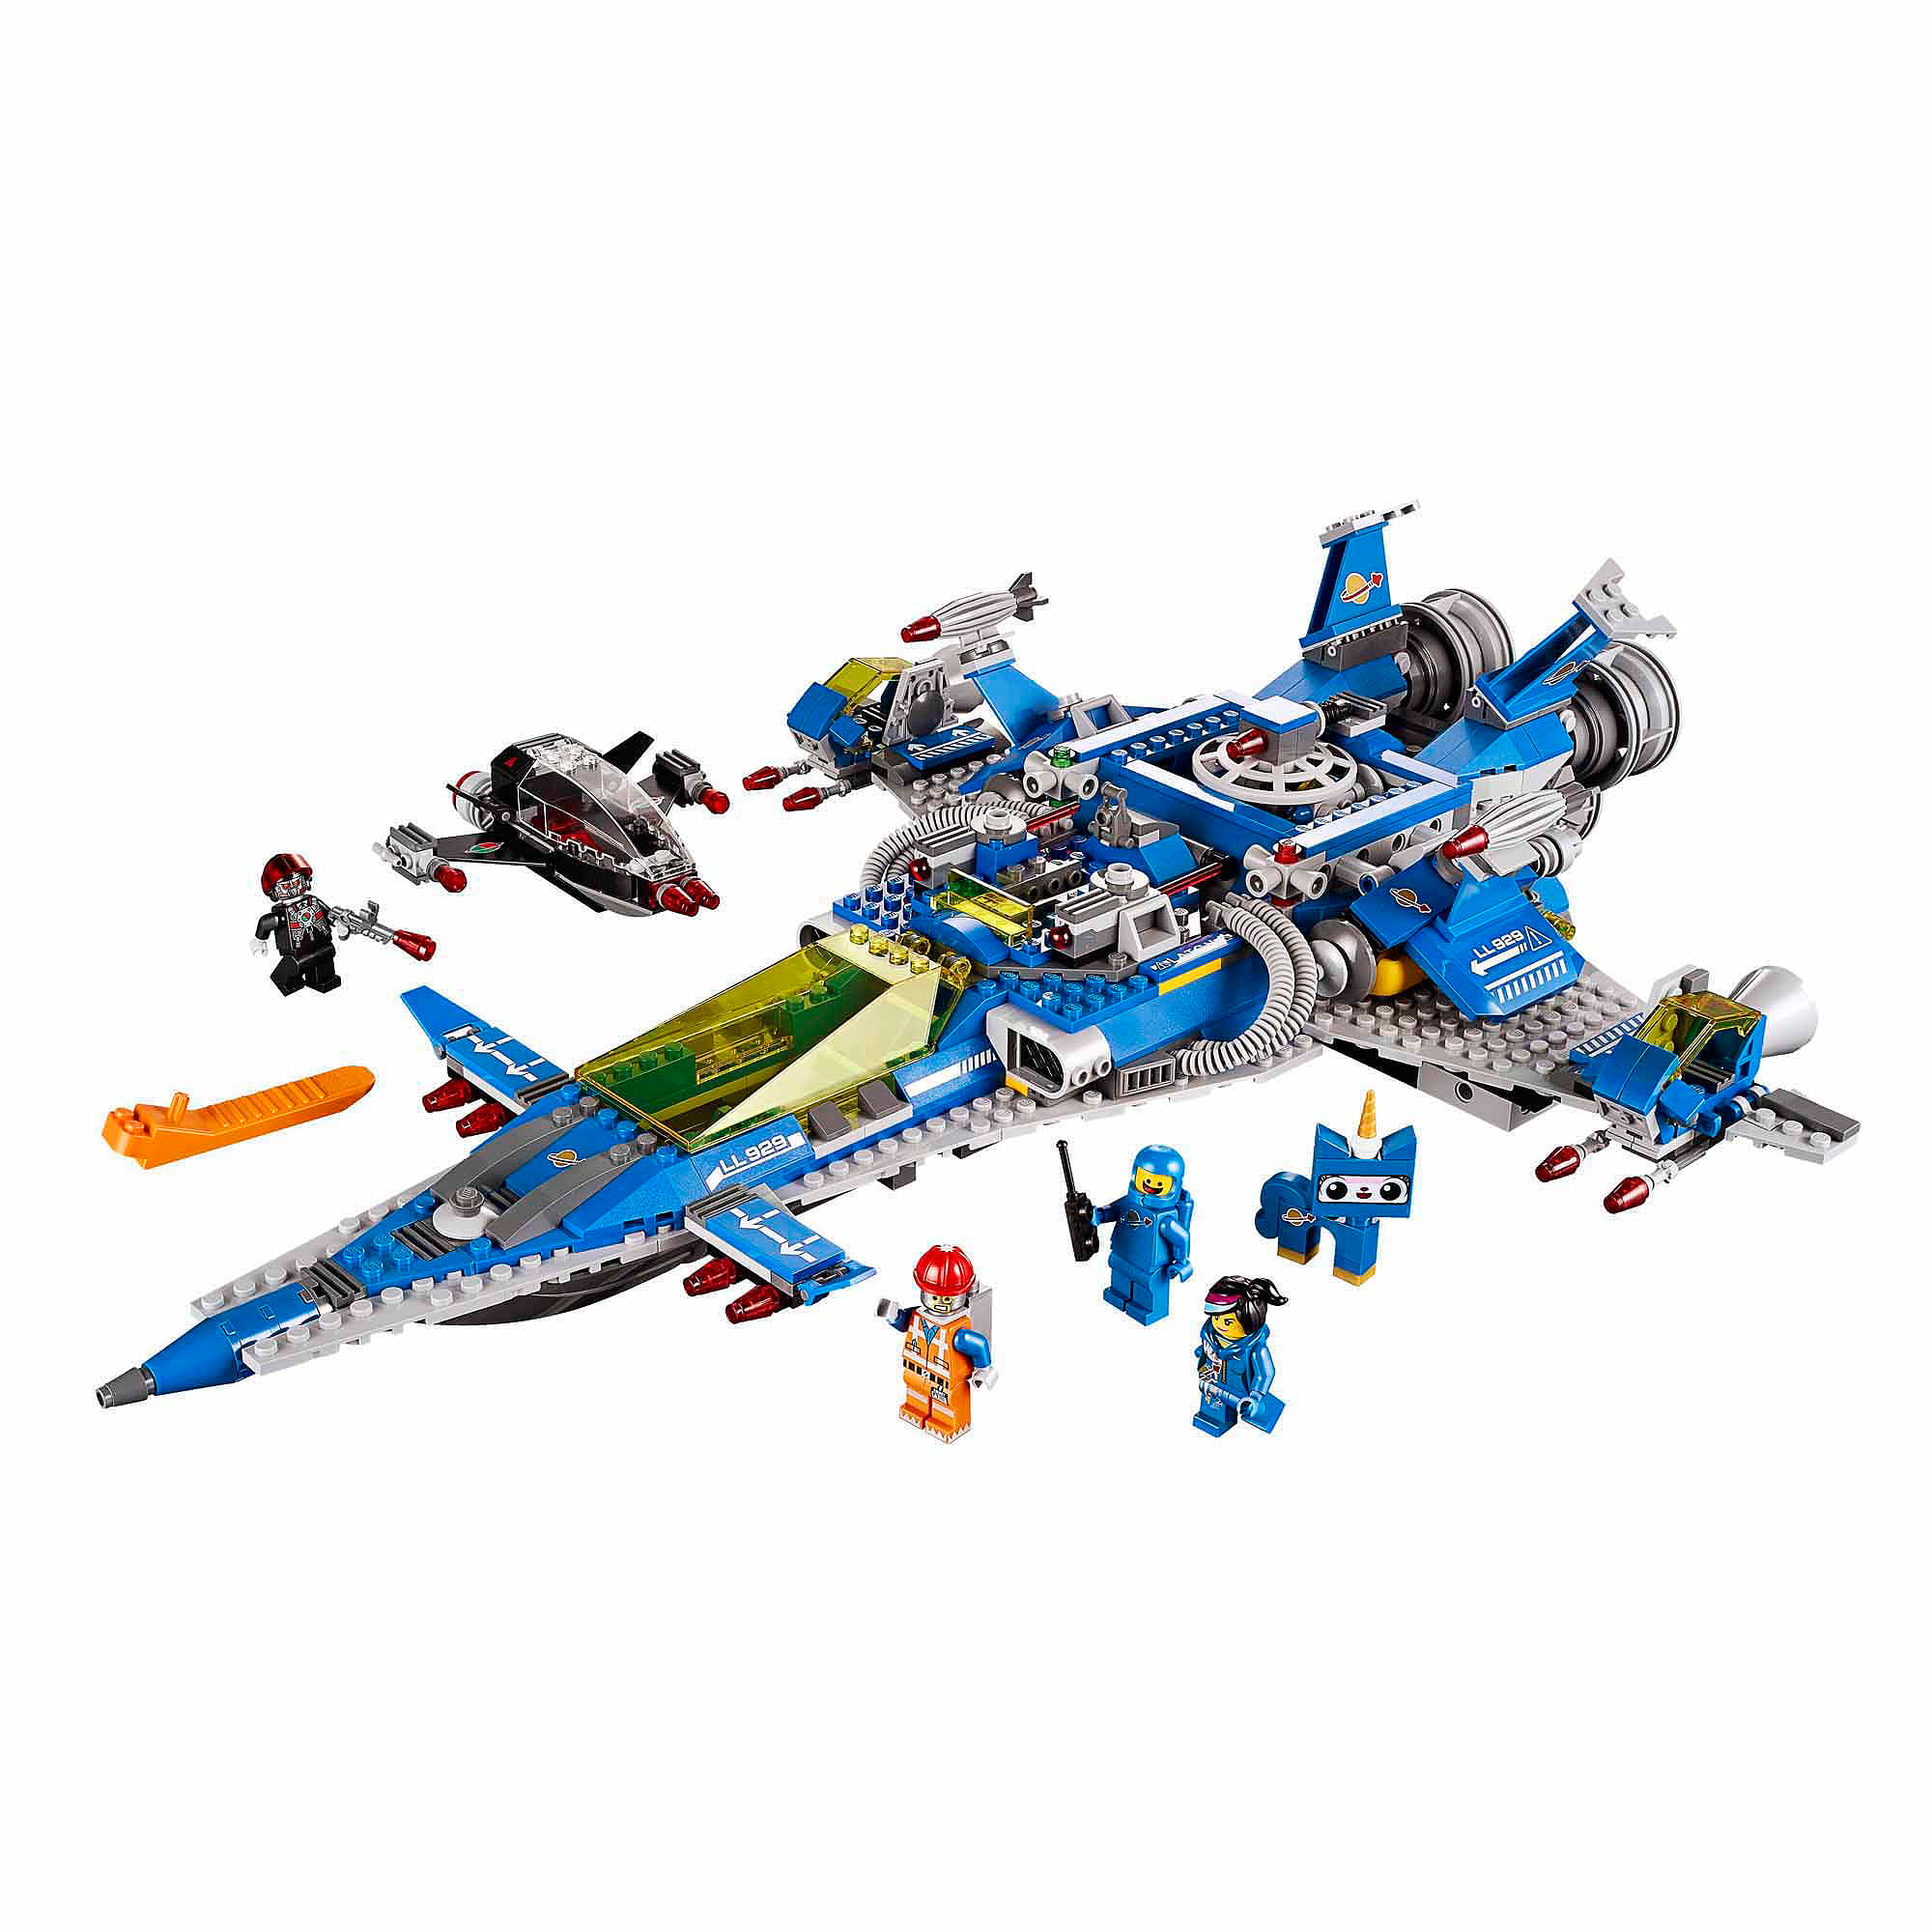 LEGO Movie Benny's Spaceship, Spaceship, SPACESHIP! - Walmart.com ...